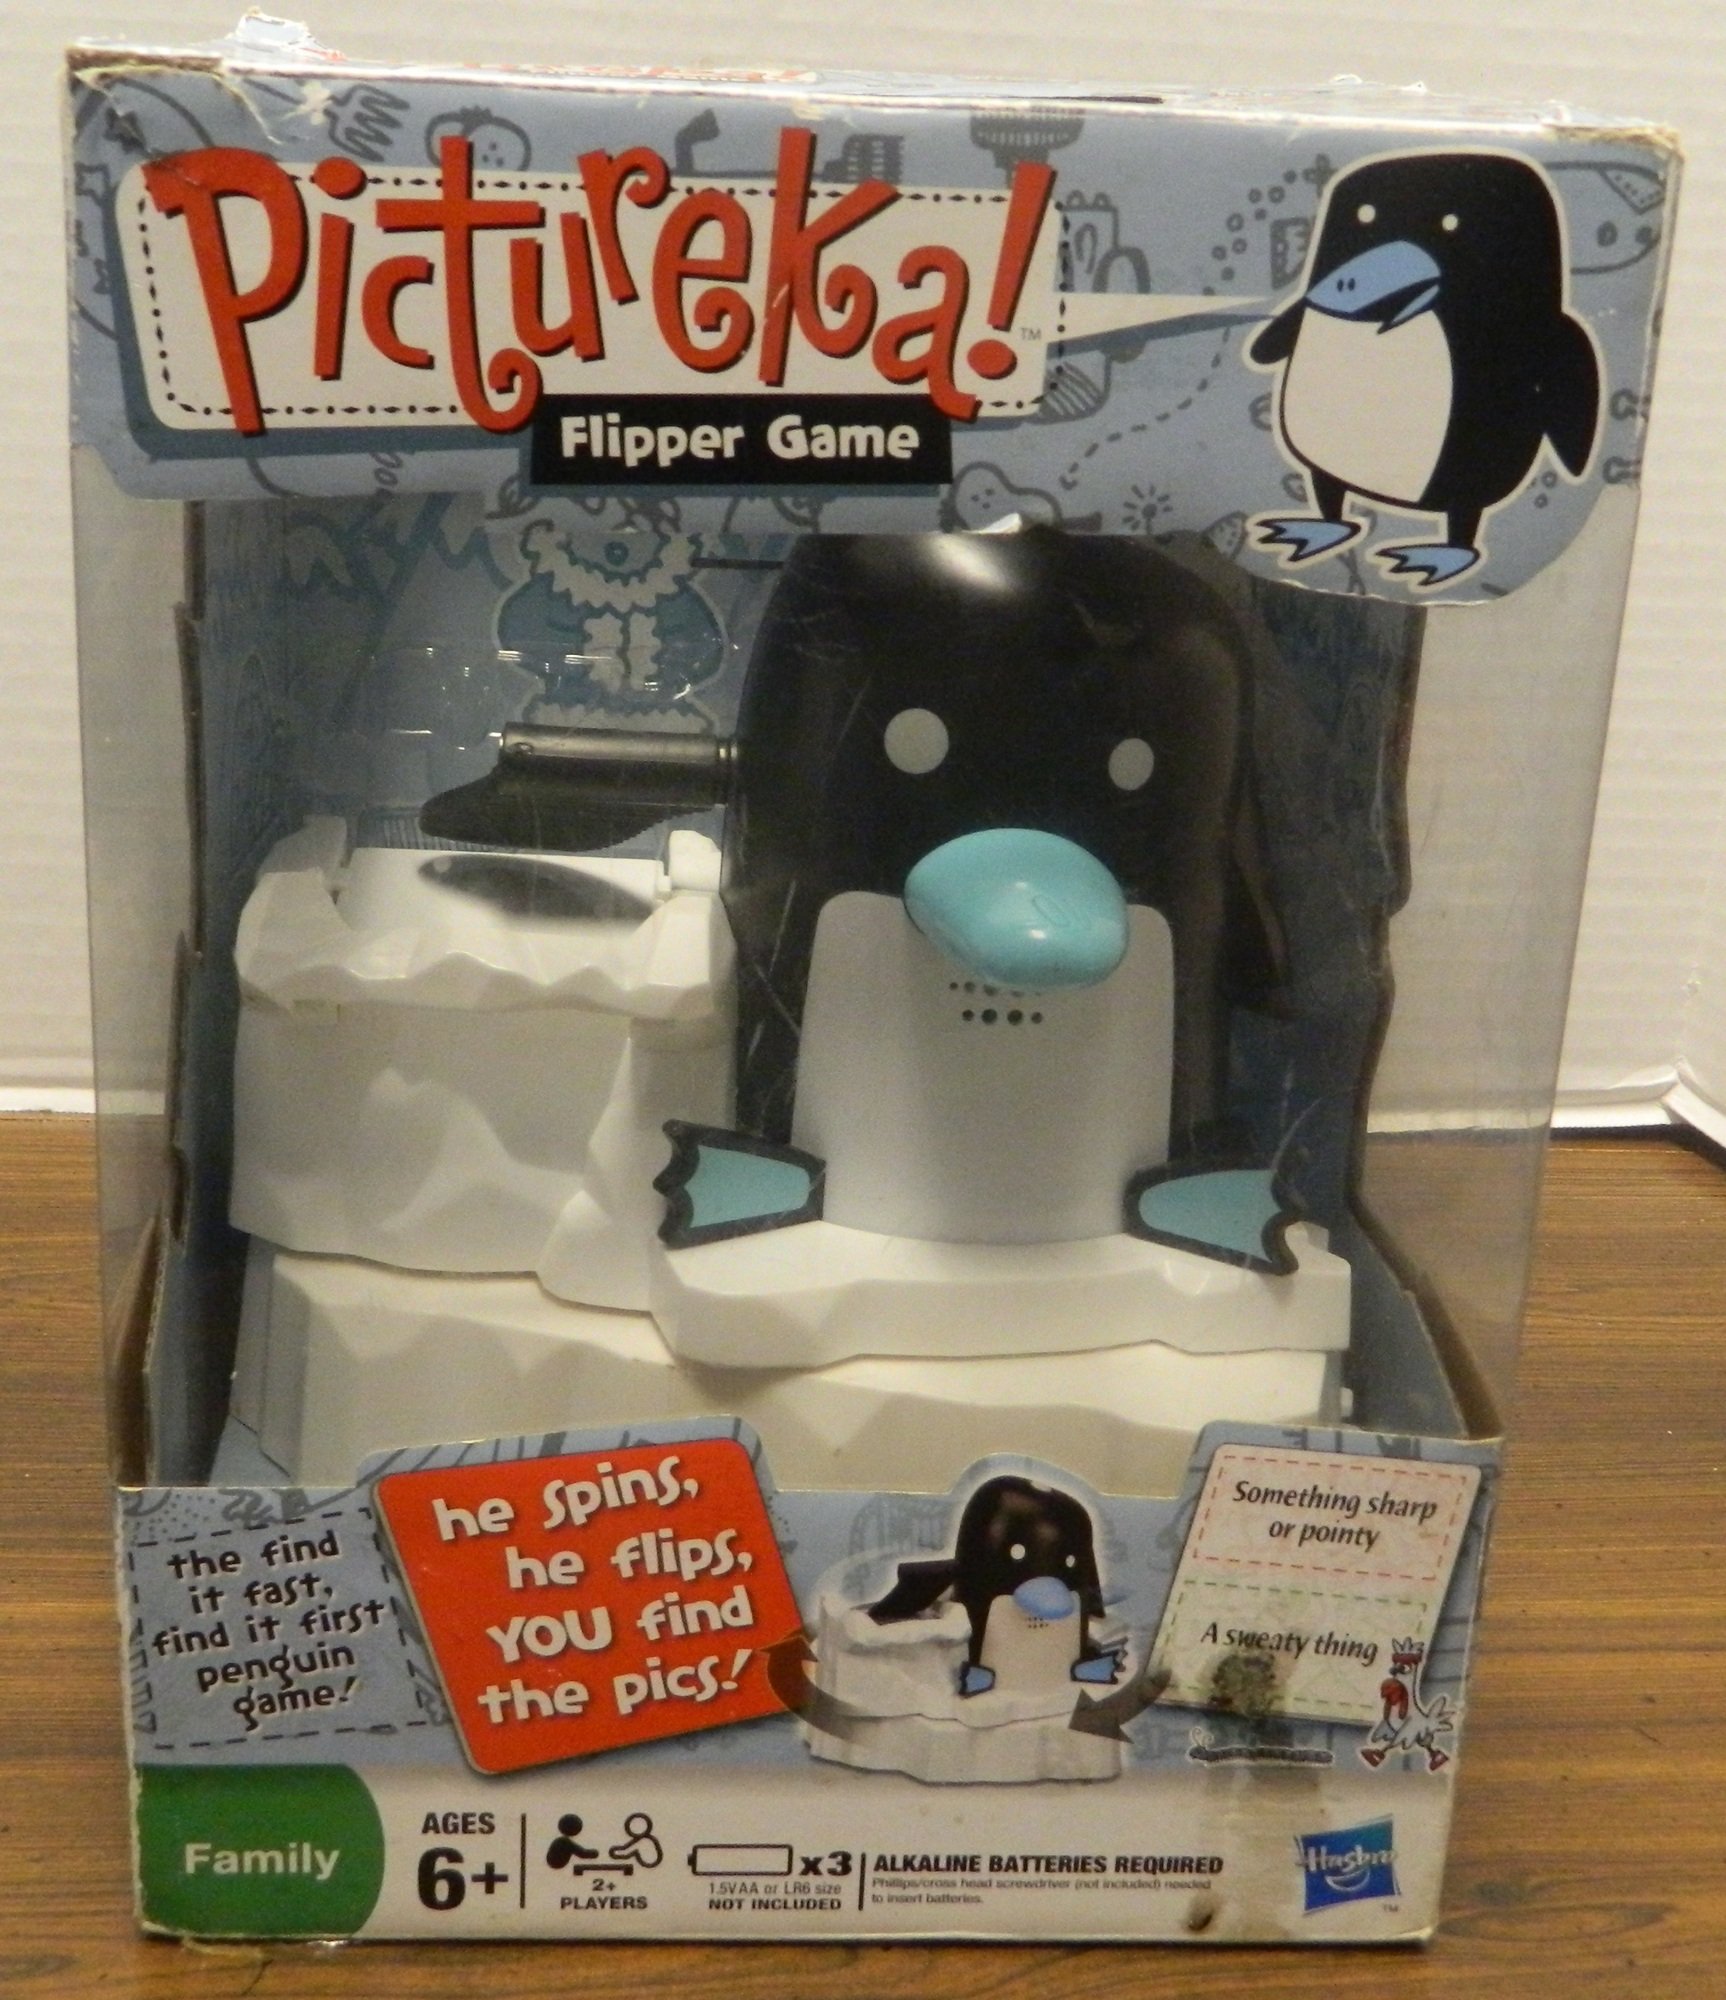 Box for Pictureka Flipper